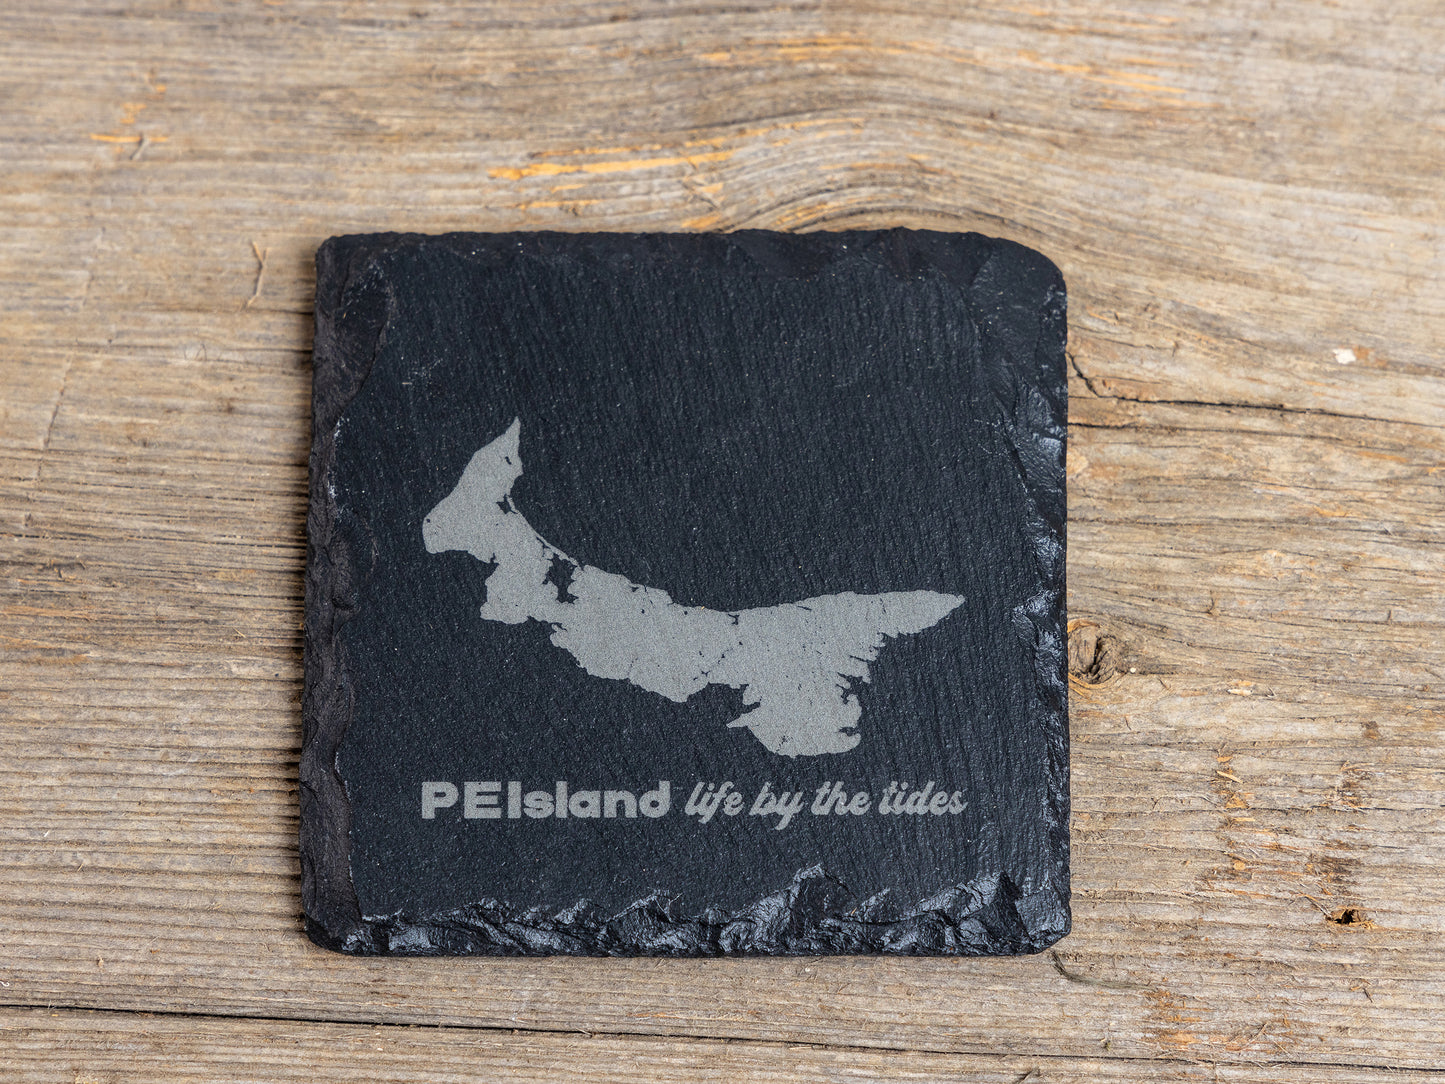 PEIsland: Life By The Tides Slate Coaster